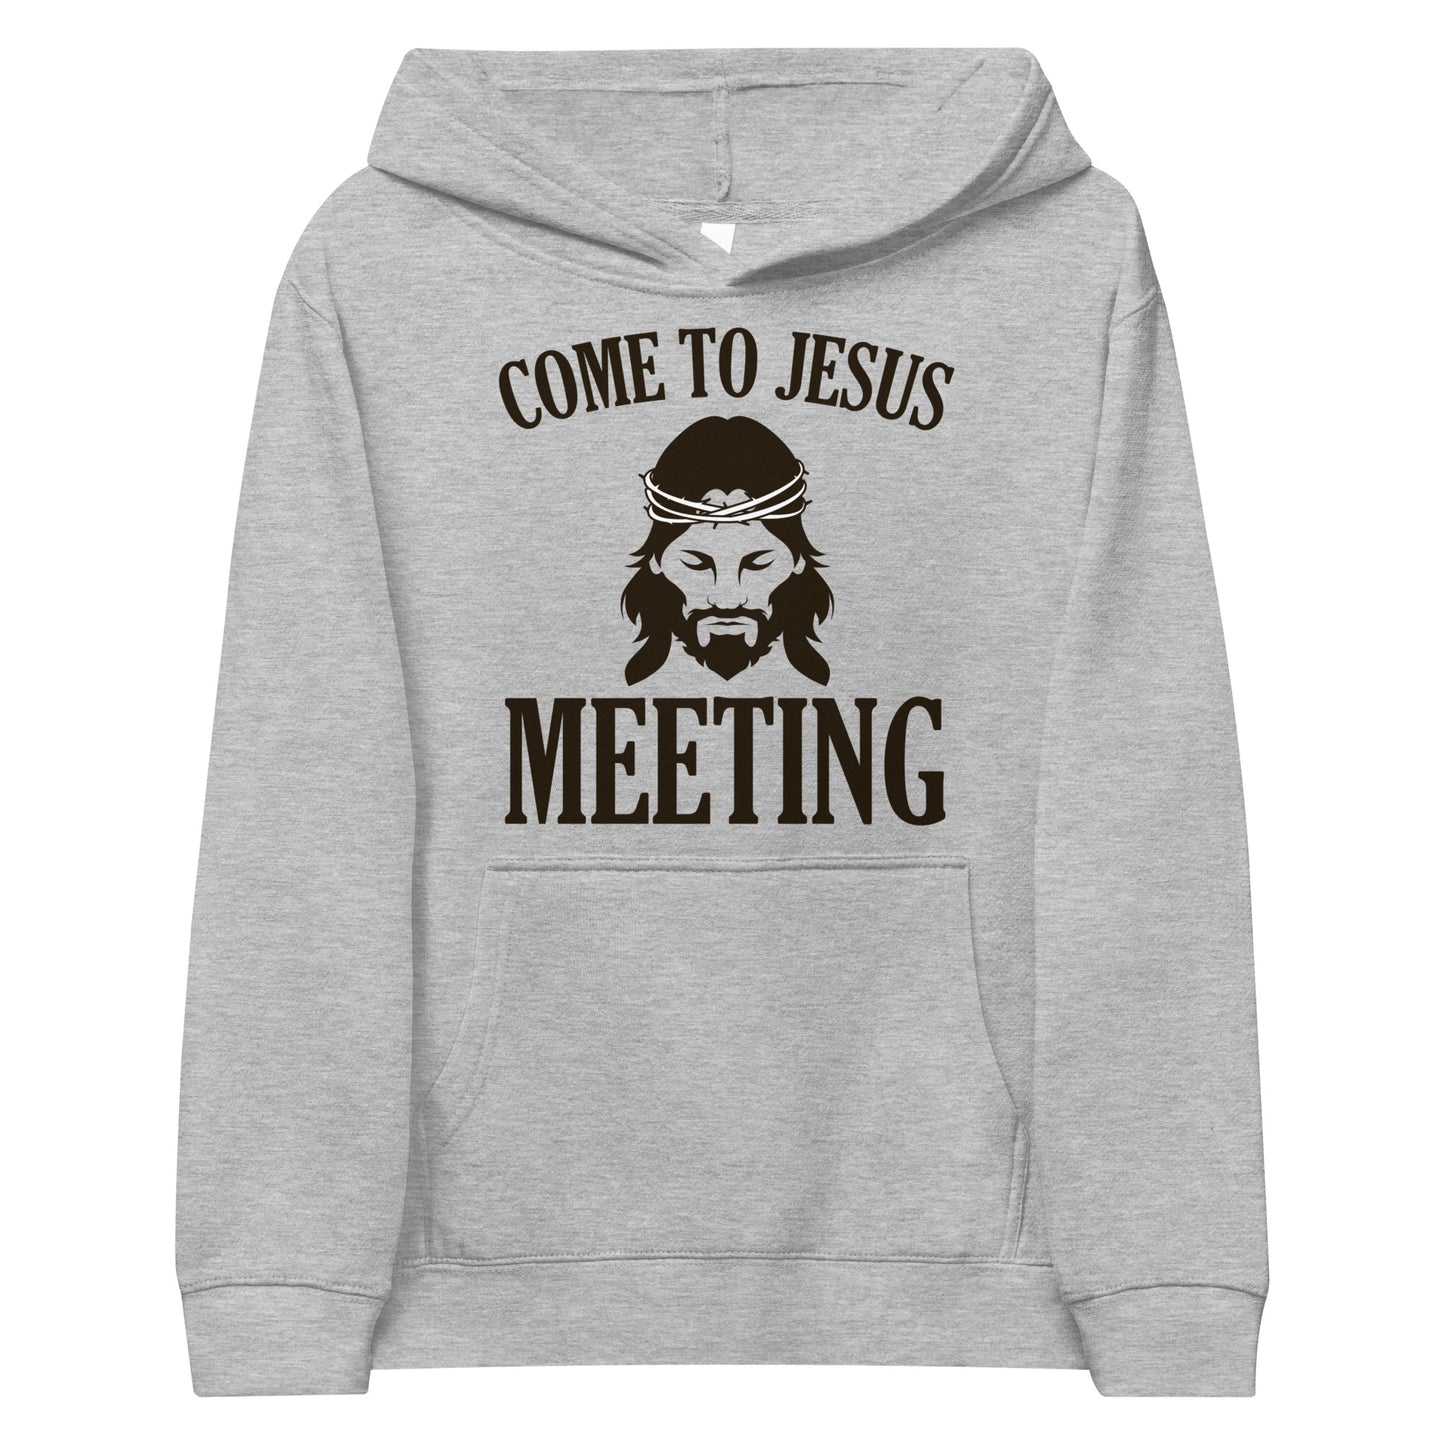 Come to Jesus Meeting / Kids Hoodie